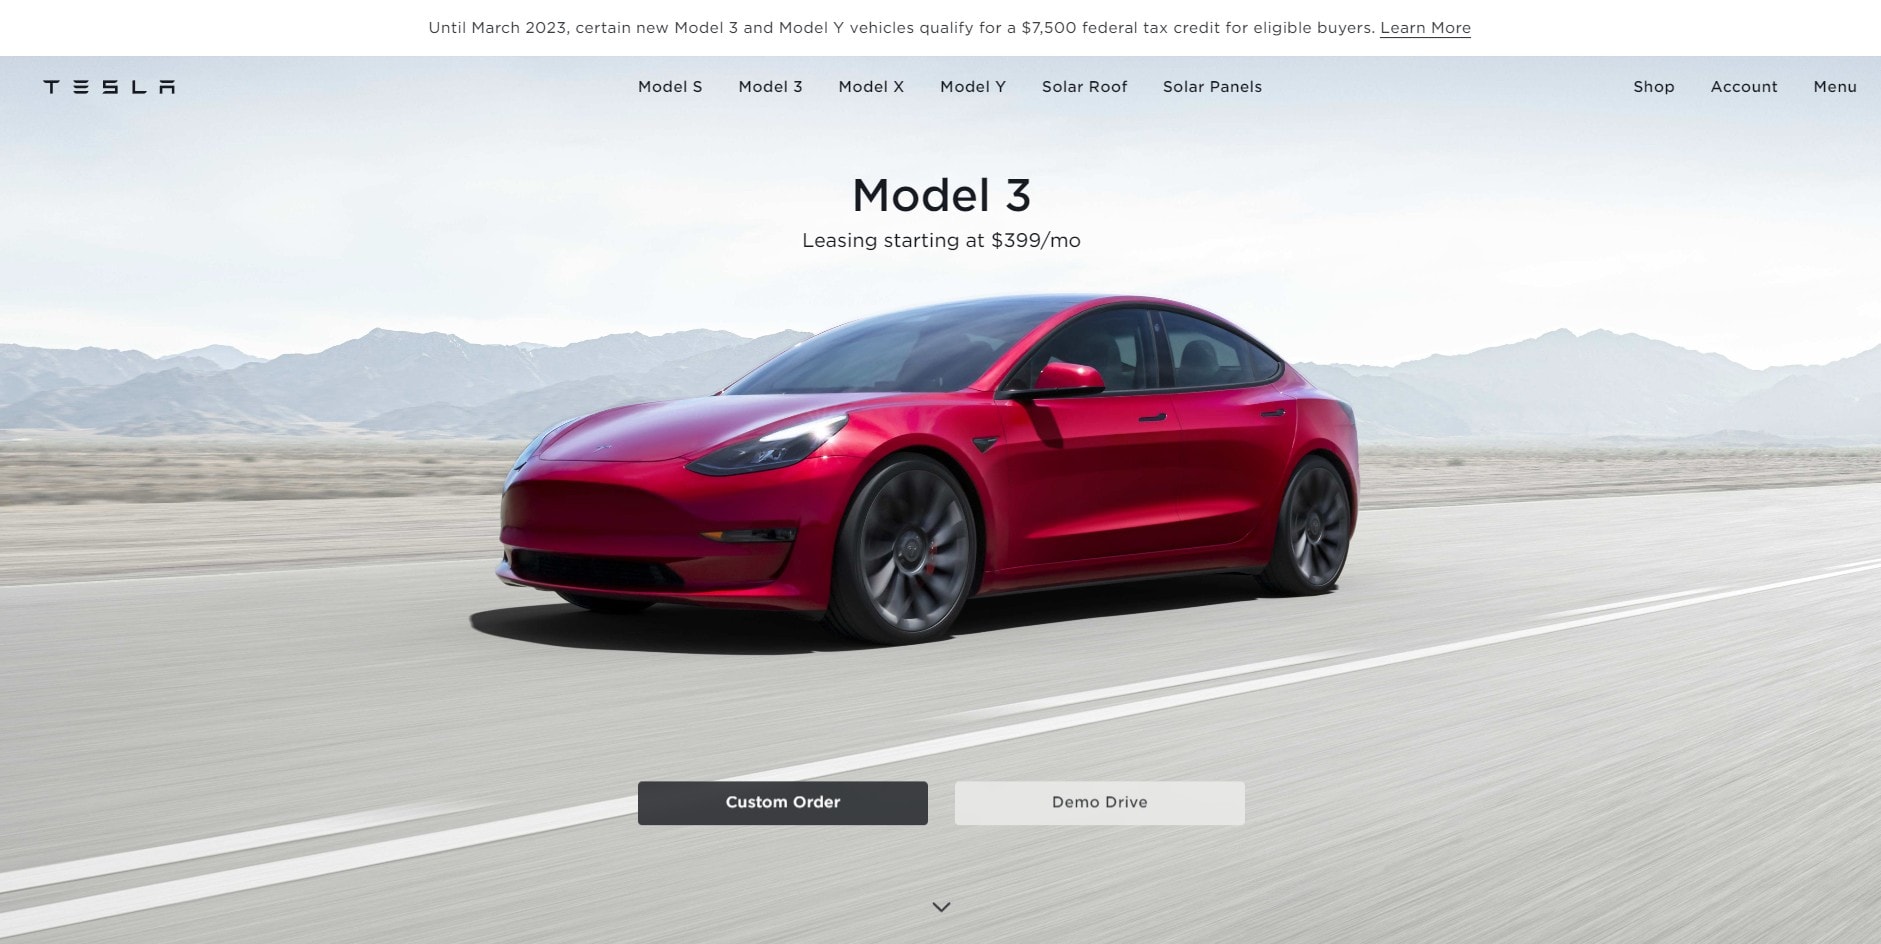 Tesla Model 3 Lease Deals - Select Car Leasing